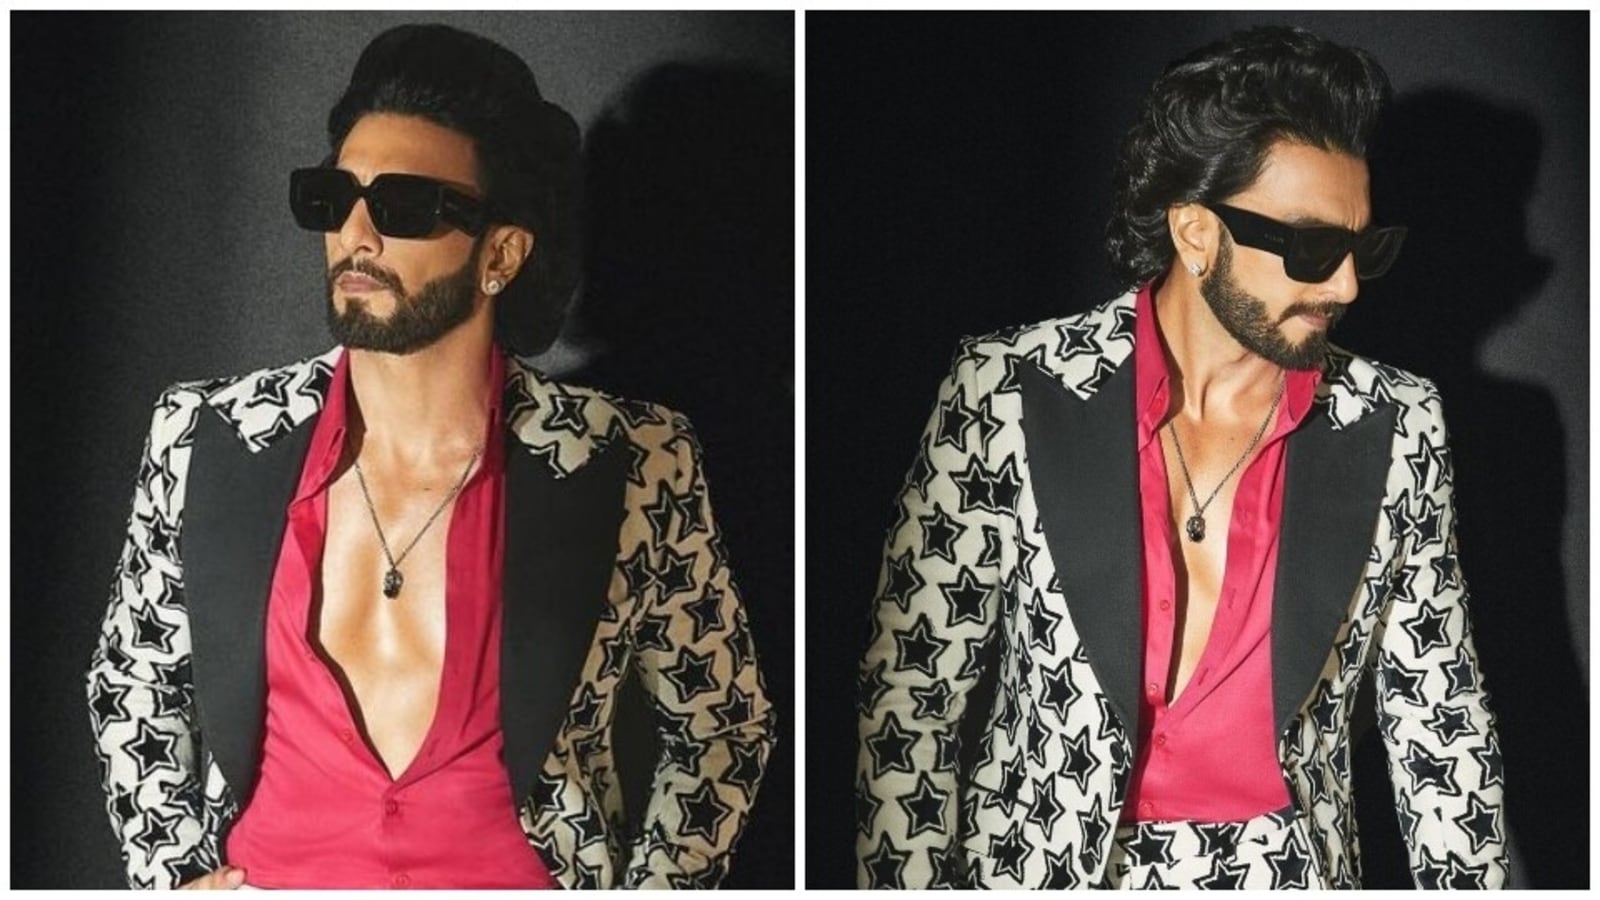 Ranveer Singh wears a black leather jacket and cool sunglasses